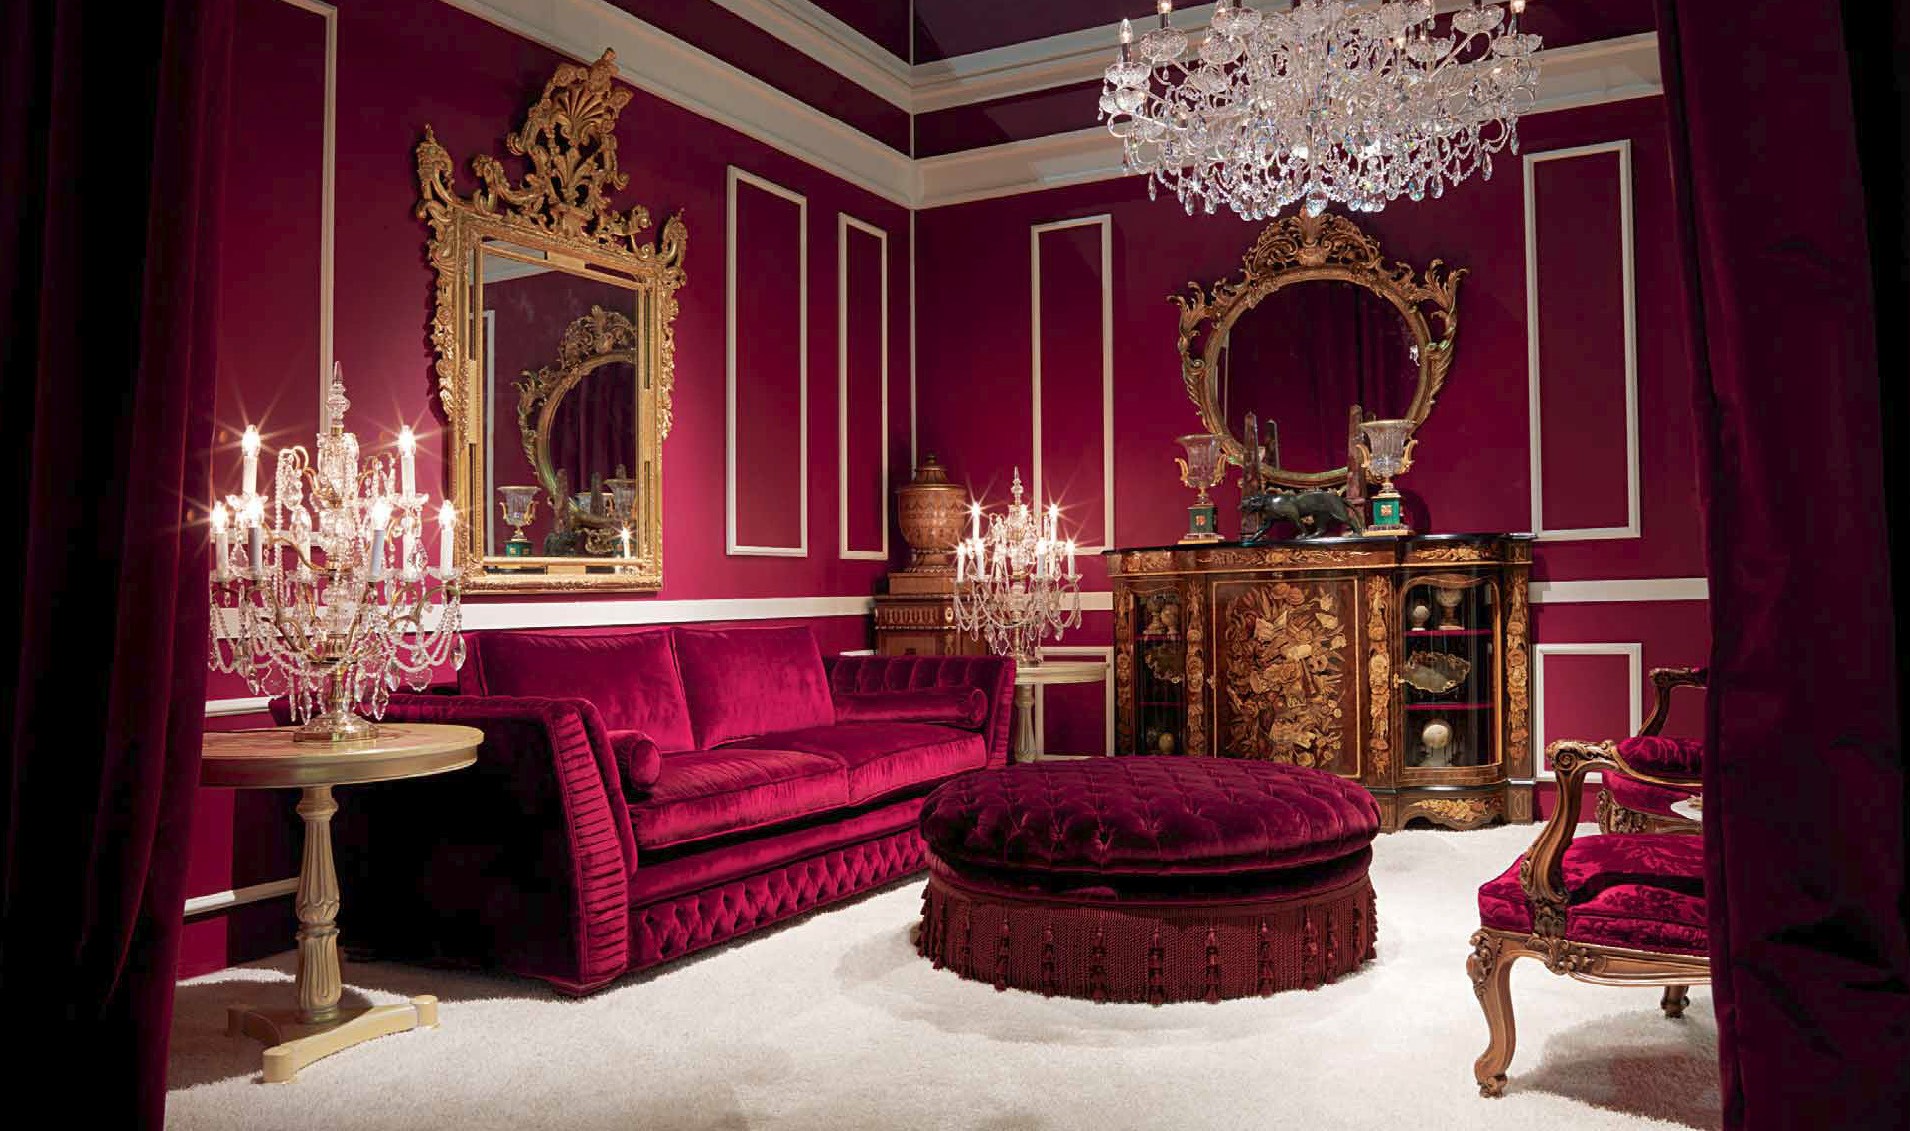 Breathtaking Royal Ruby Living Room Furniture Set